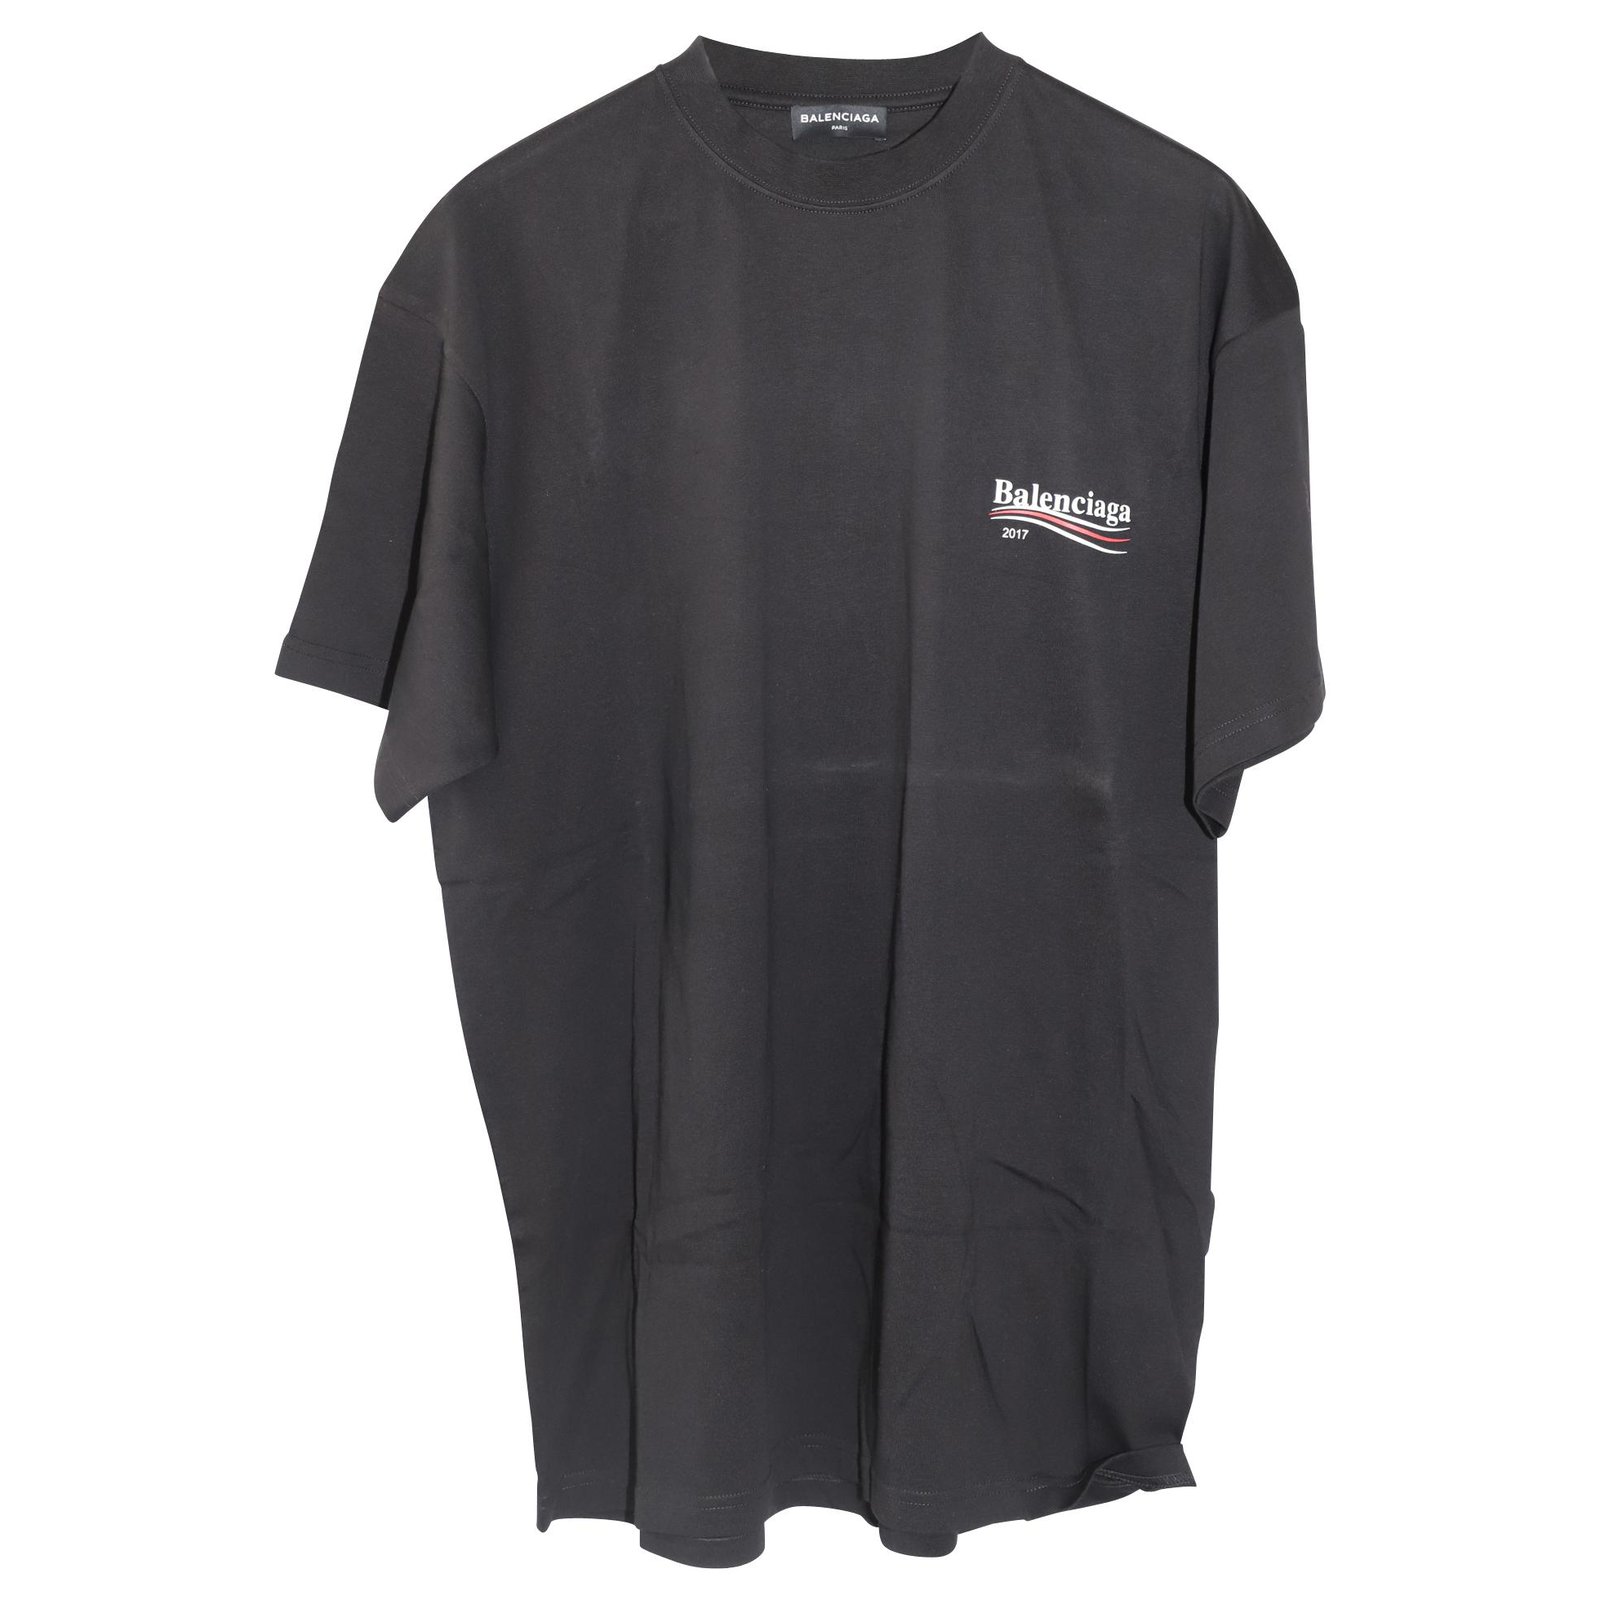 Black Balenciaga 2017 Logo Printed Oversized T-Shirt